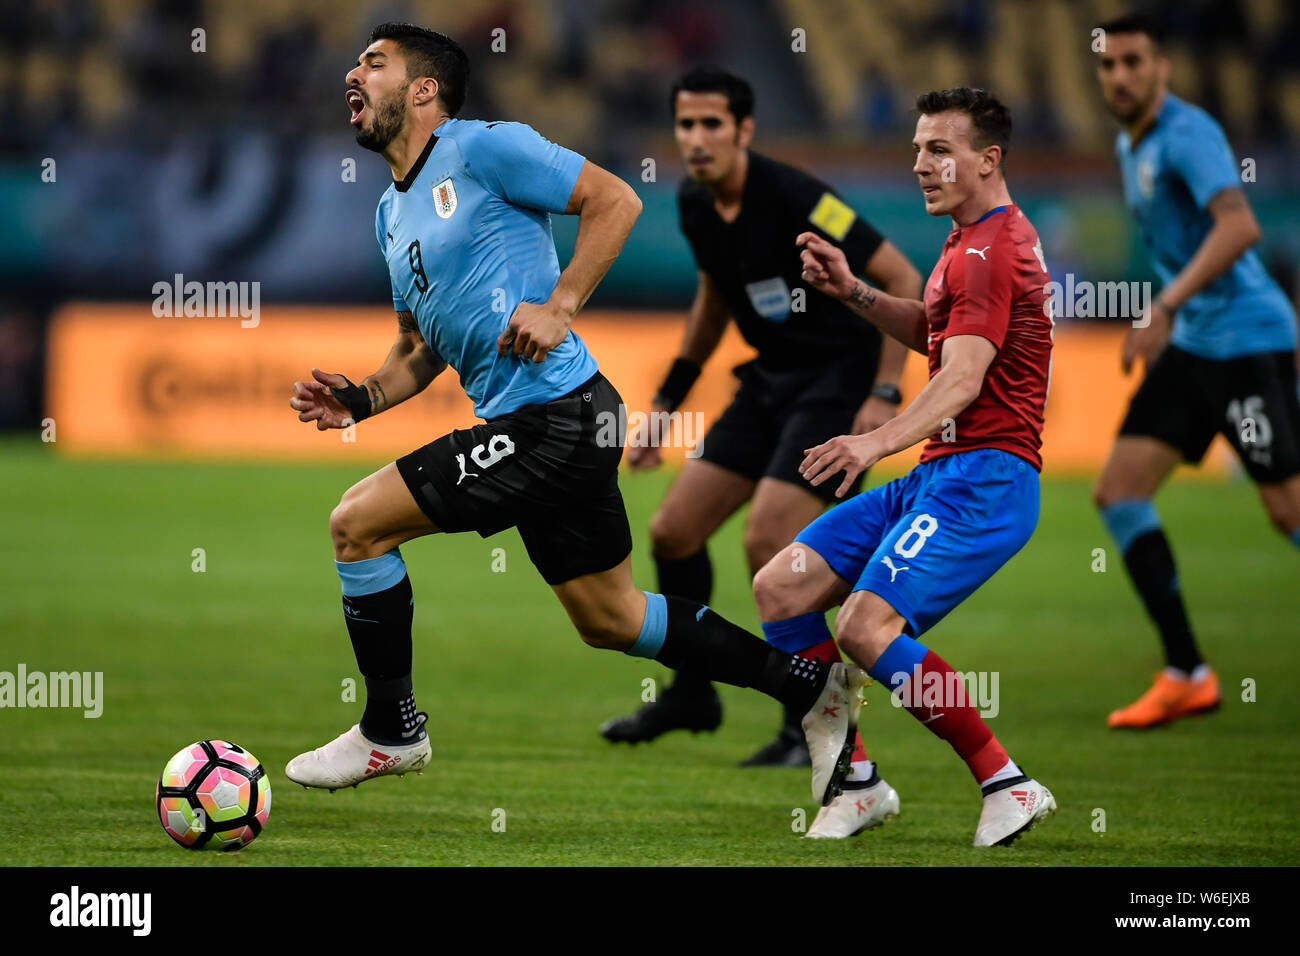 Luis Suarez, left, of Uruguay national football team kicks the ball to make a pass against Vladimir Darida of Czech Republic national football team in Stock Photo